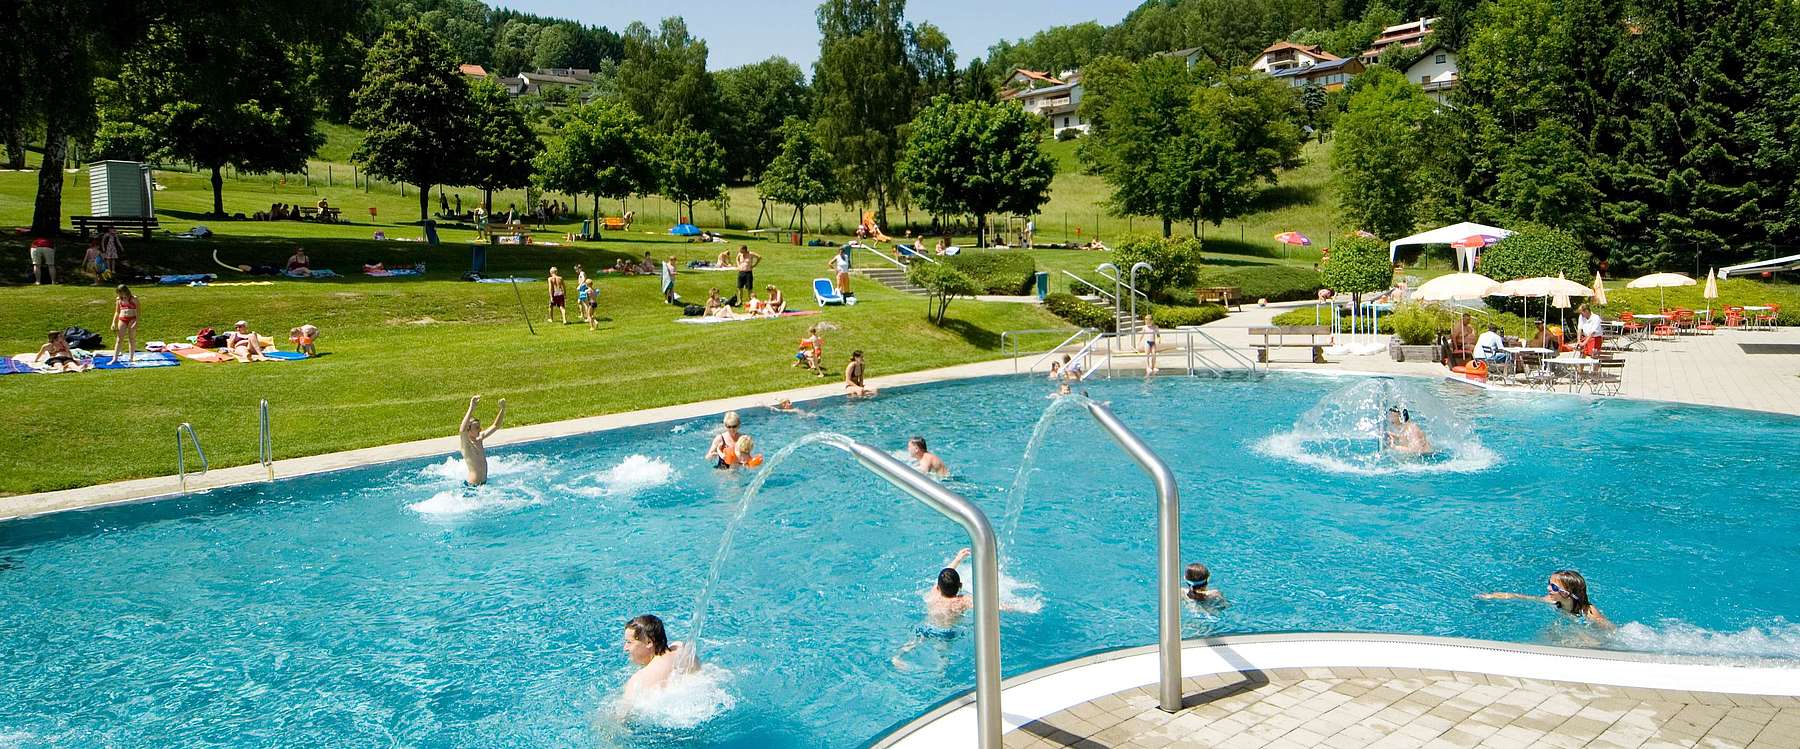 Pool with sunbathing lawn in Schönberg